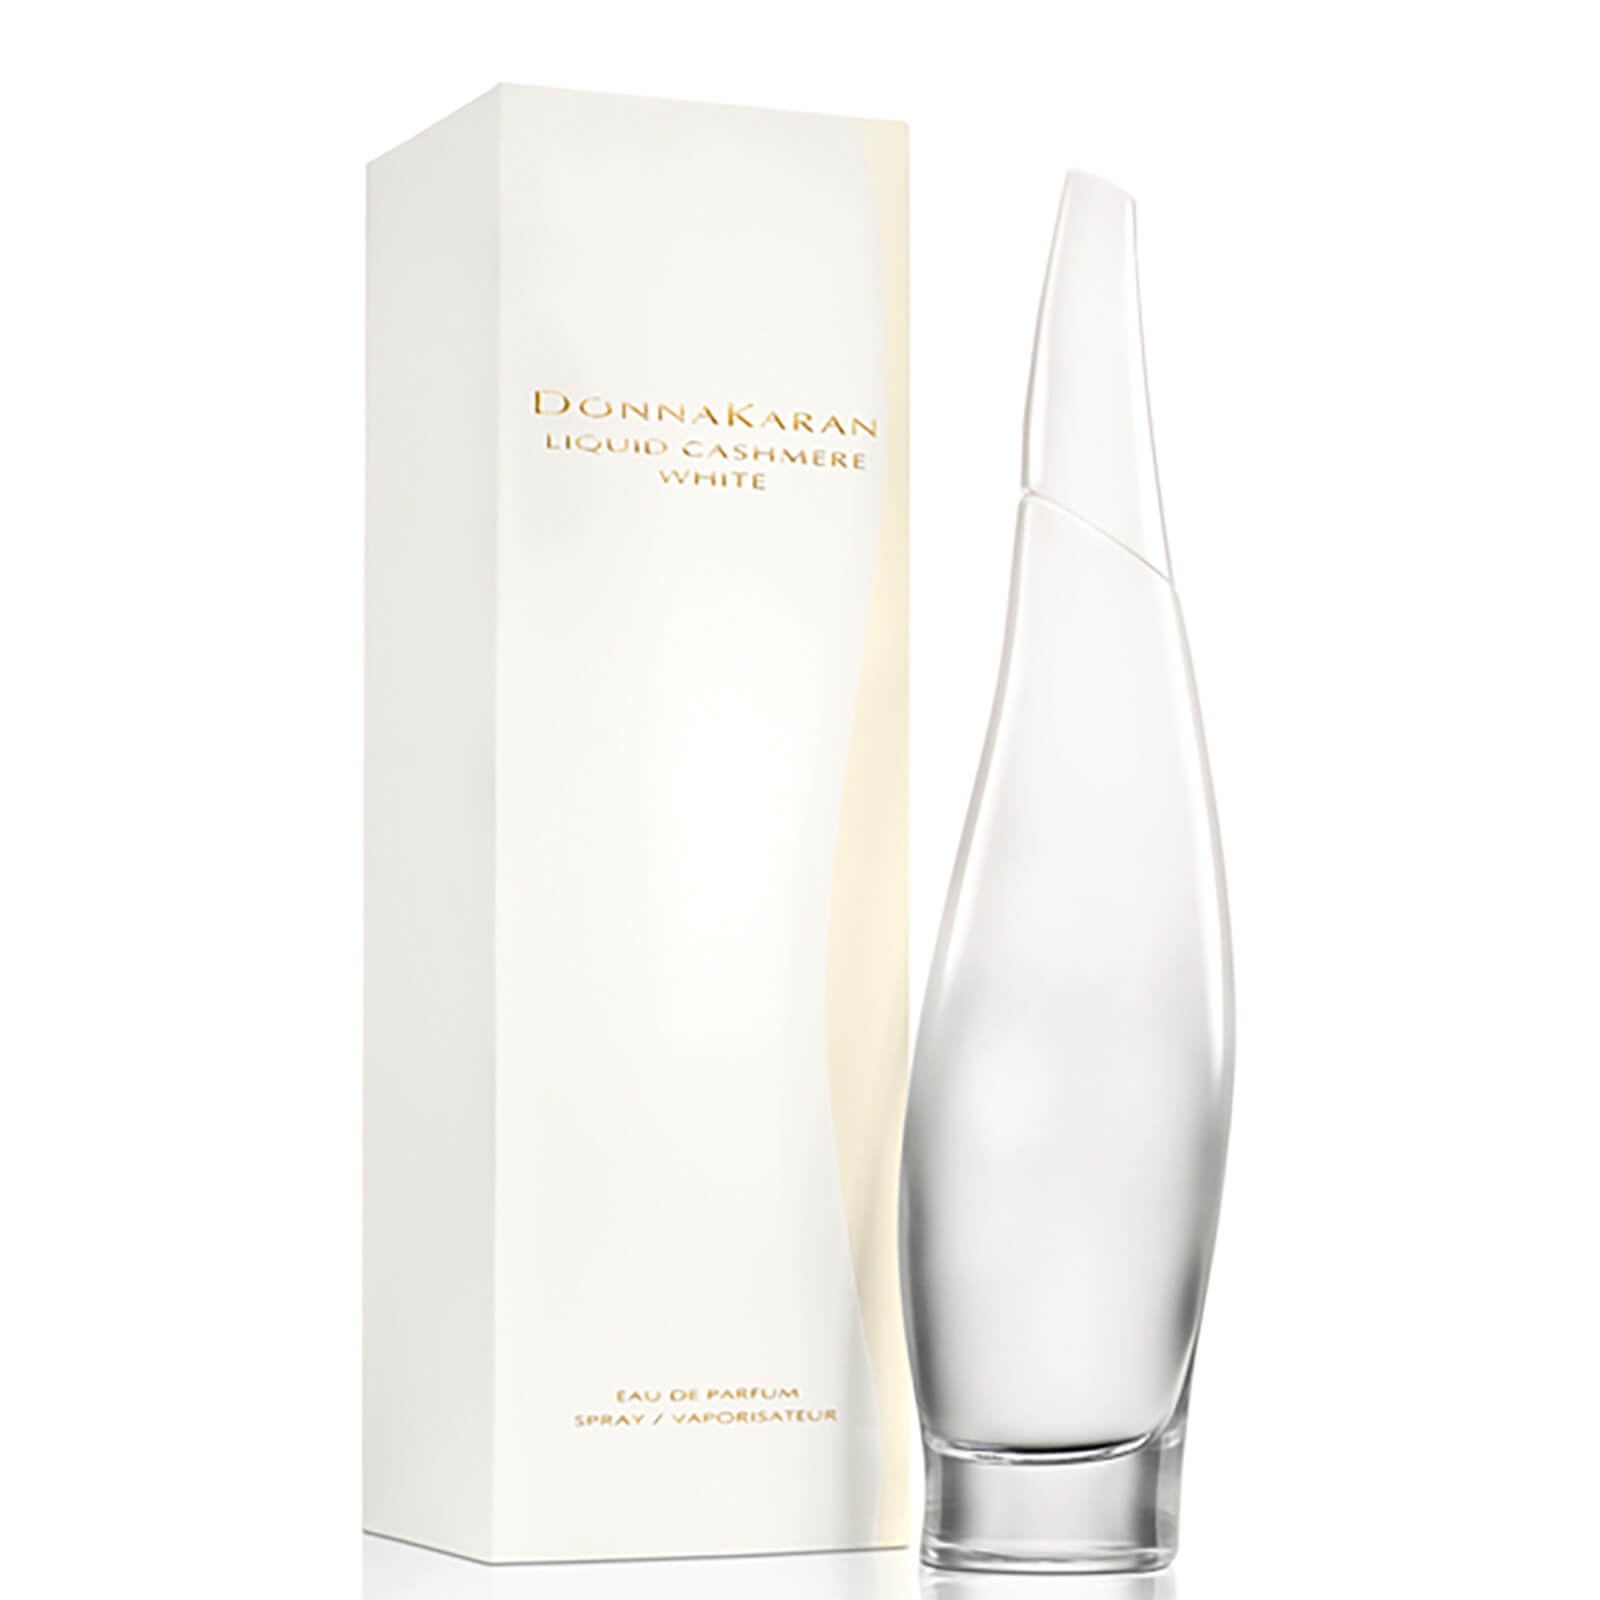 DK Donna Karan Liquid Cashmere White Eau de Parfum (100 ml)